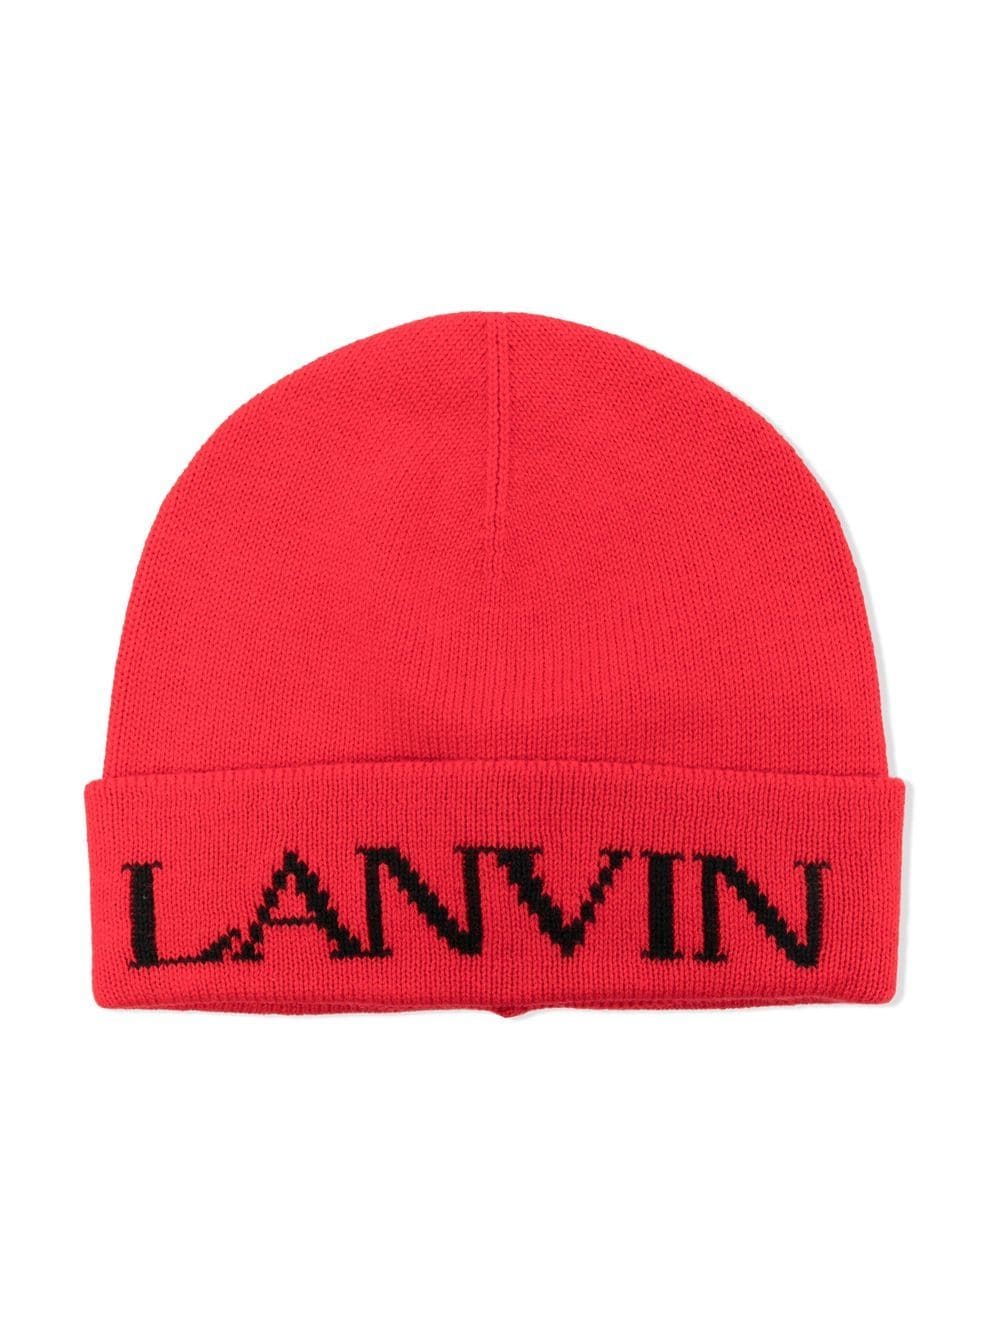 lanvin enfant logo-knit beanie hat - red